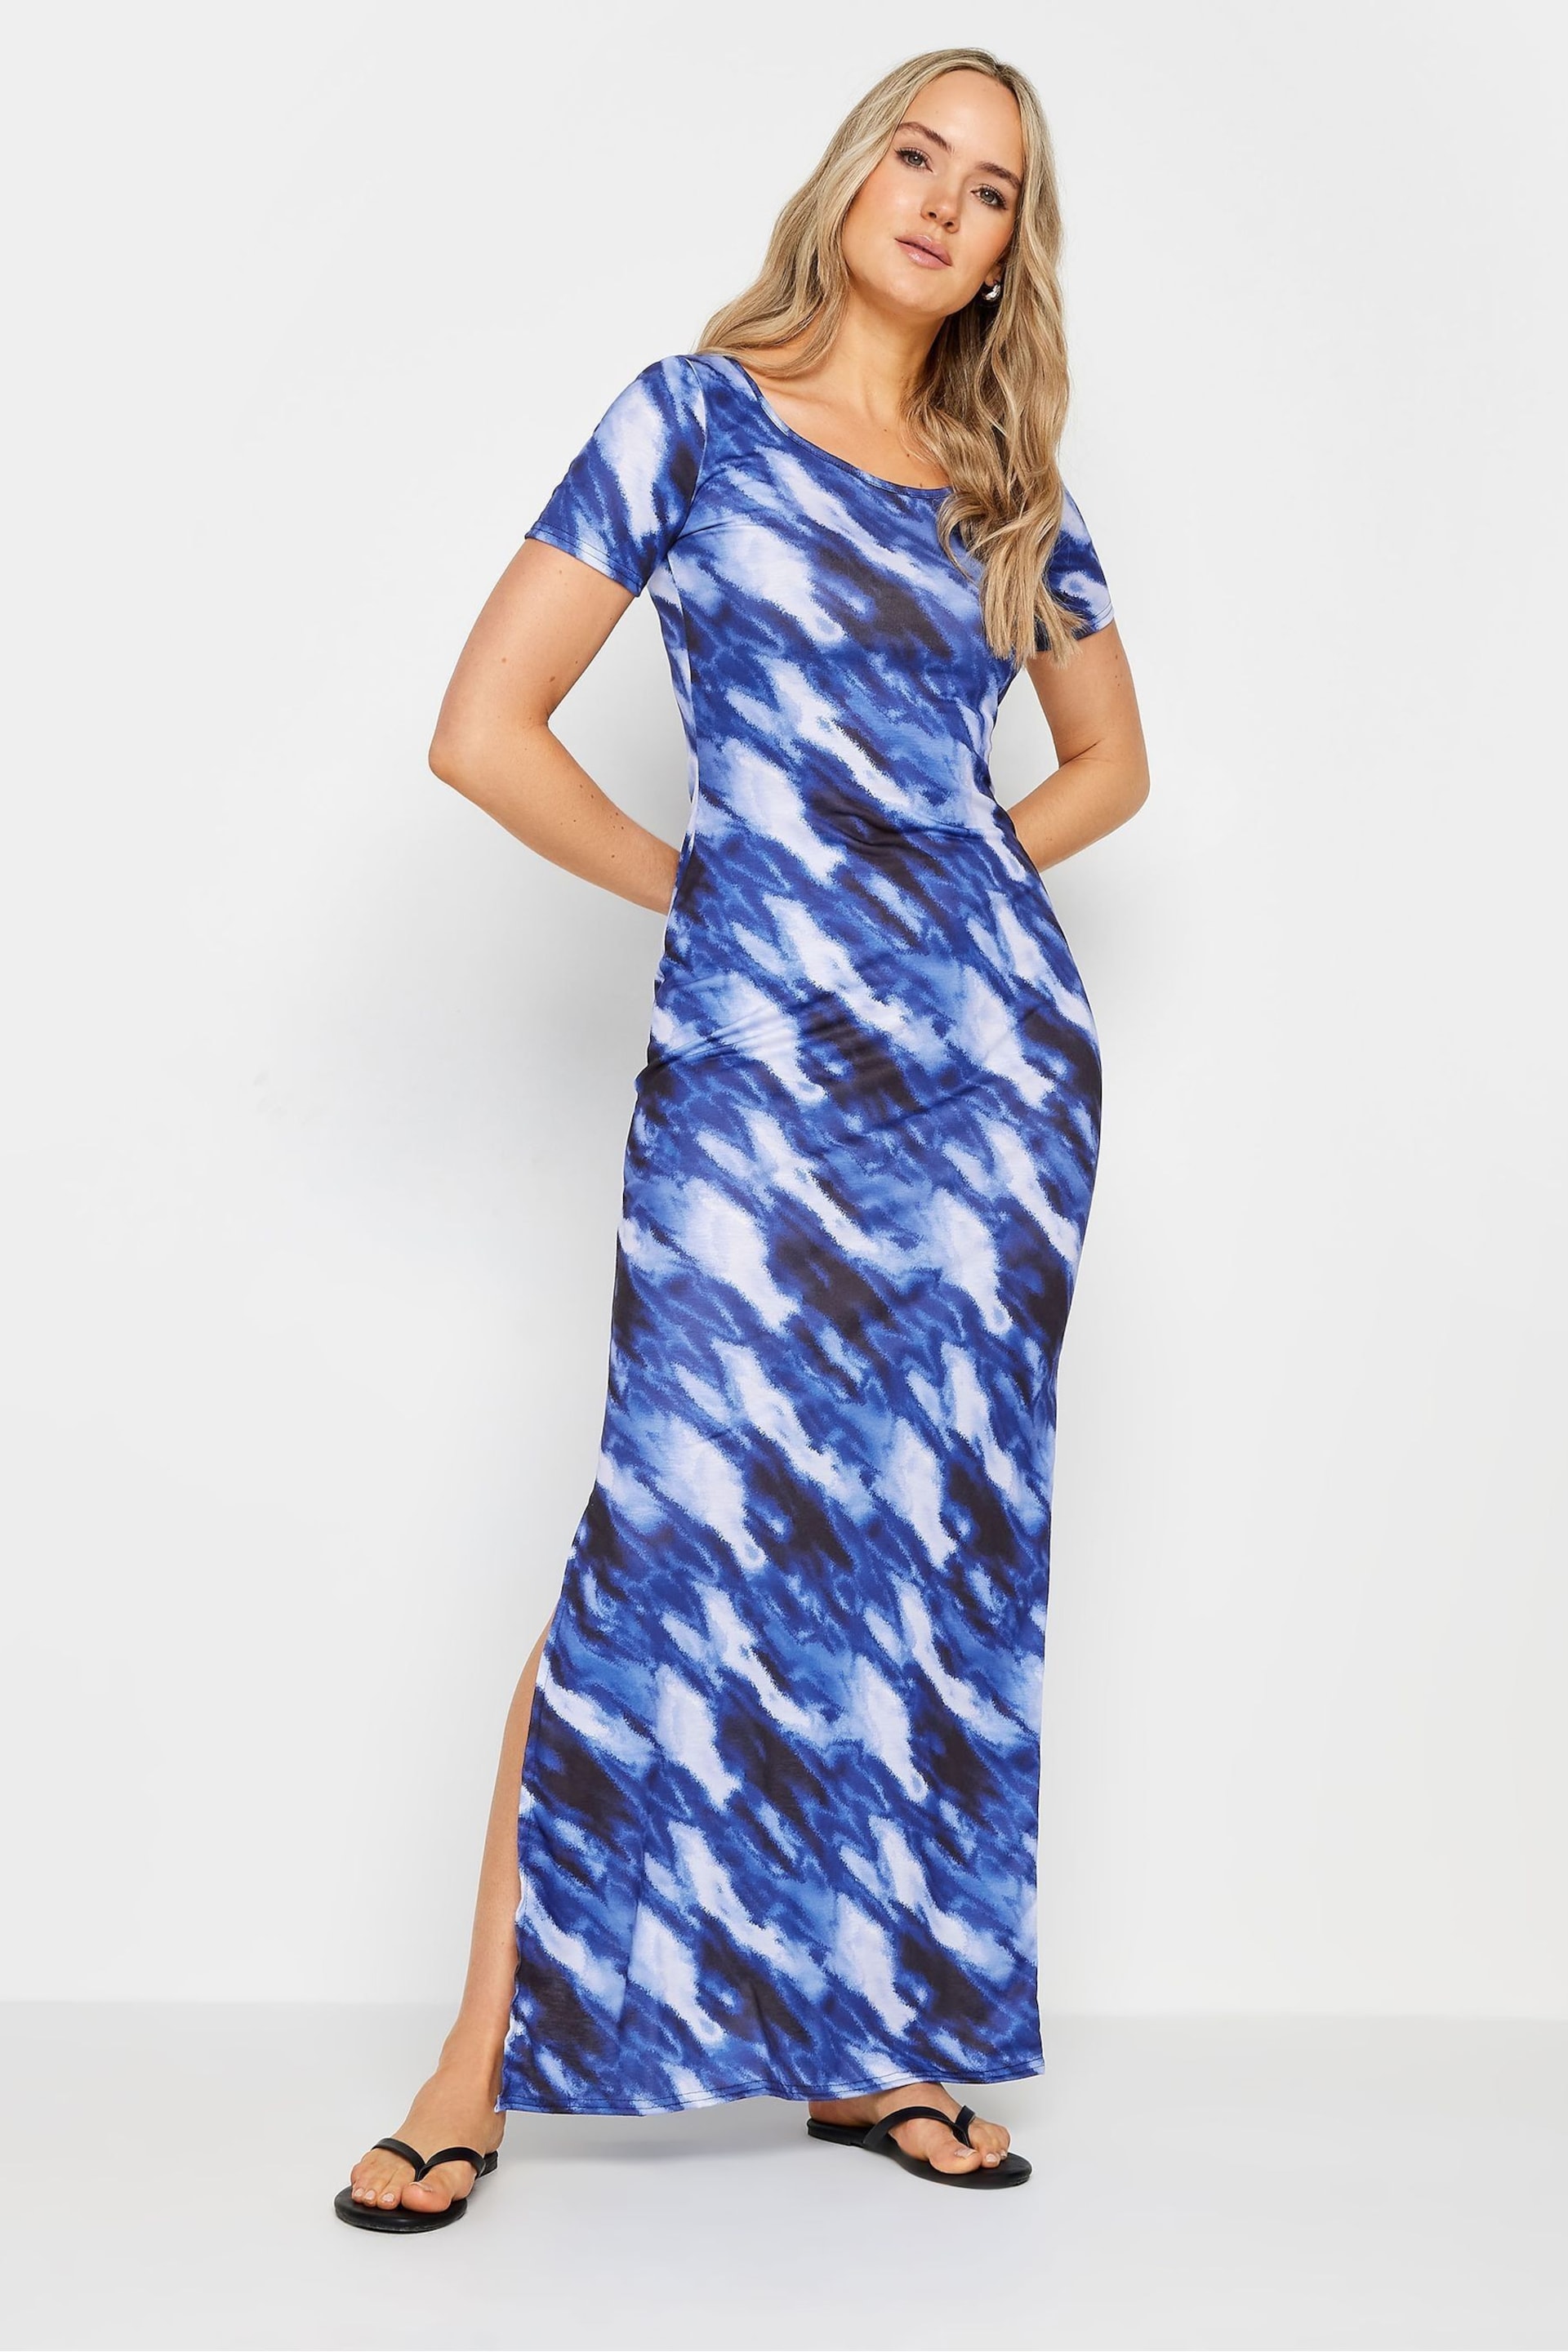 Long Tall Sally Blue Maxi Dress - Image 3 of 6